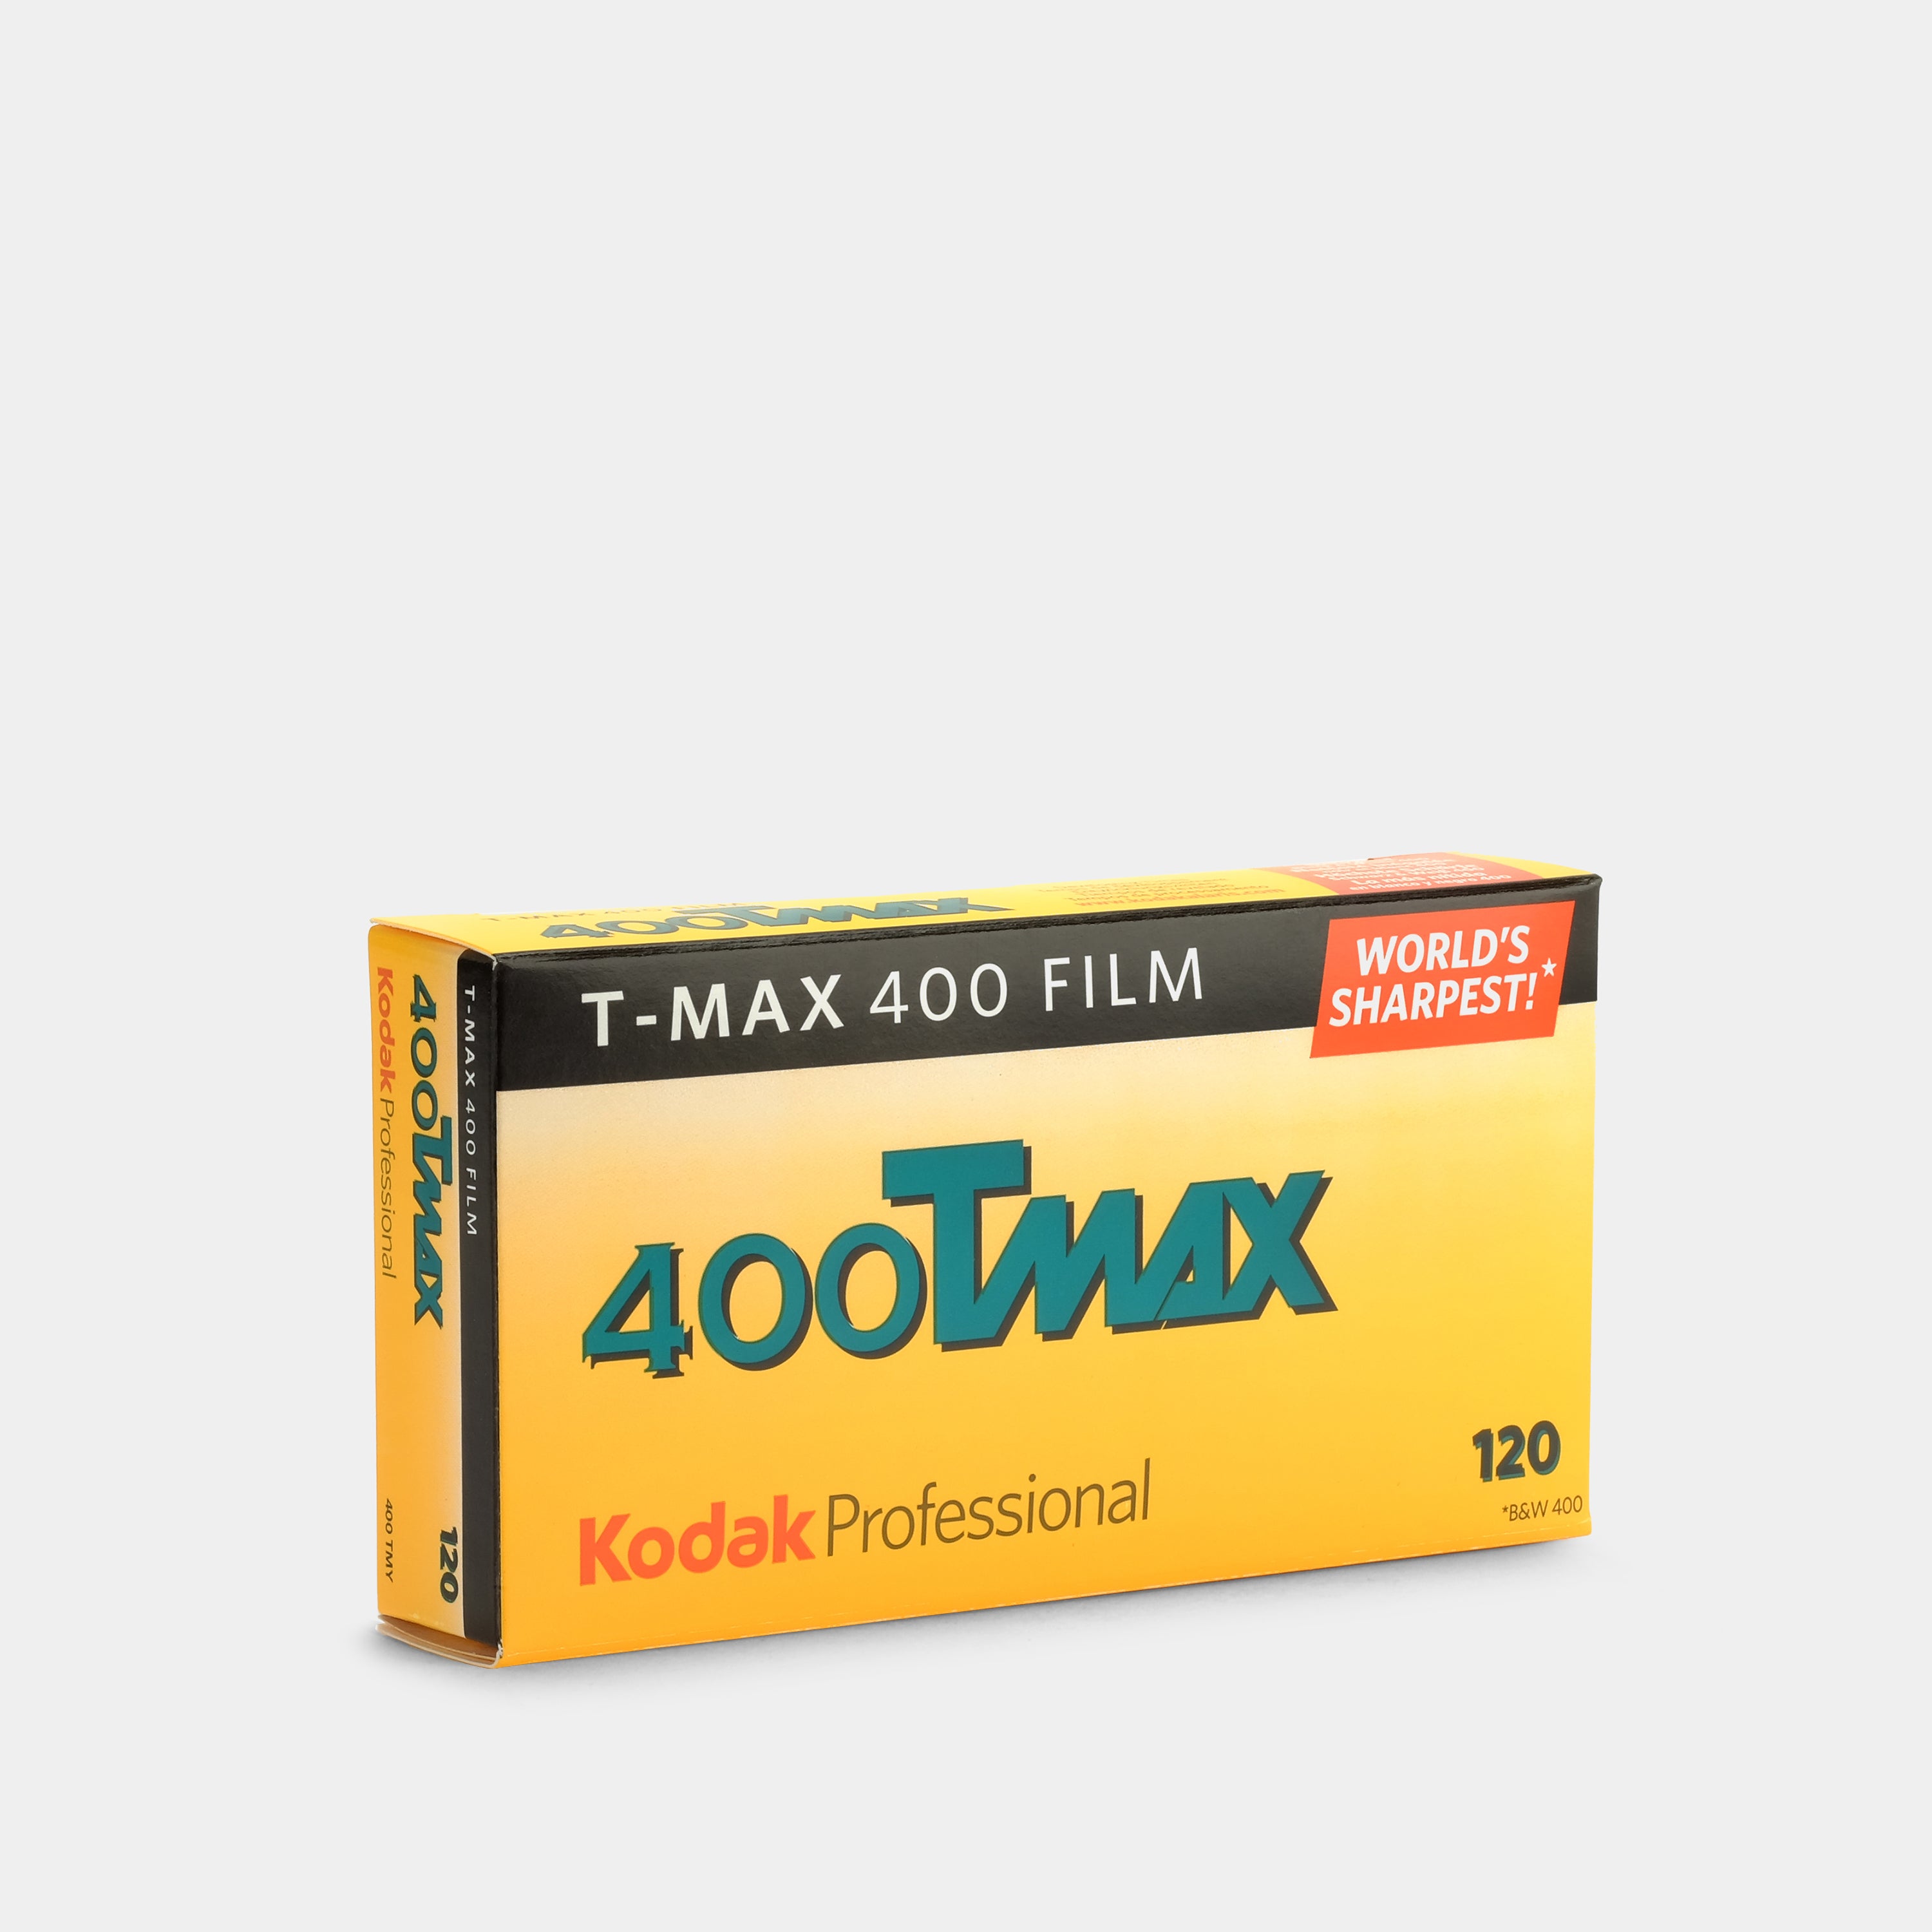 Kodak Professional T-MAX 400 Black and White 120 Film - 5 Pack